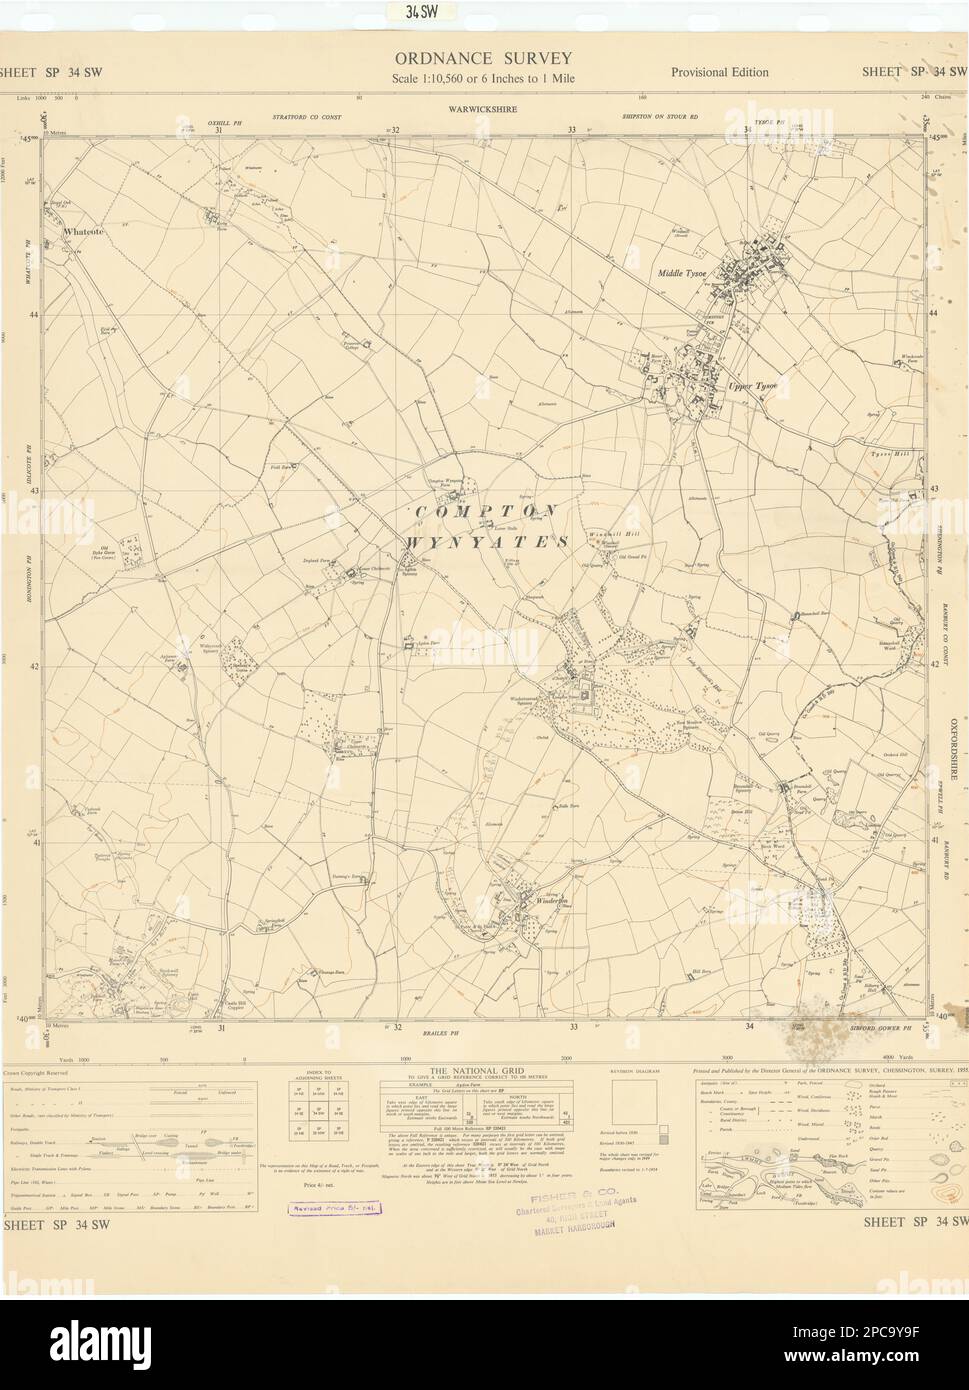 Hoja de estudio de ordnance SP34SW Warwickshire Tysoe Winderton 1955 antiguo mapa vintage Foto de stock